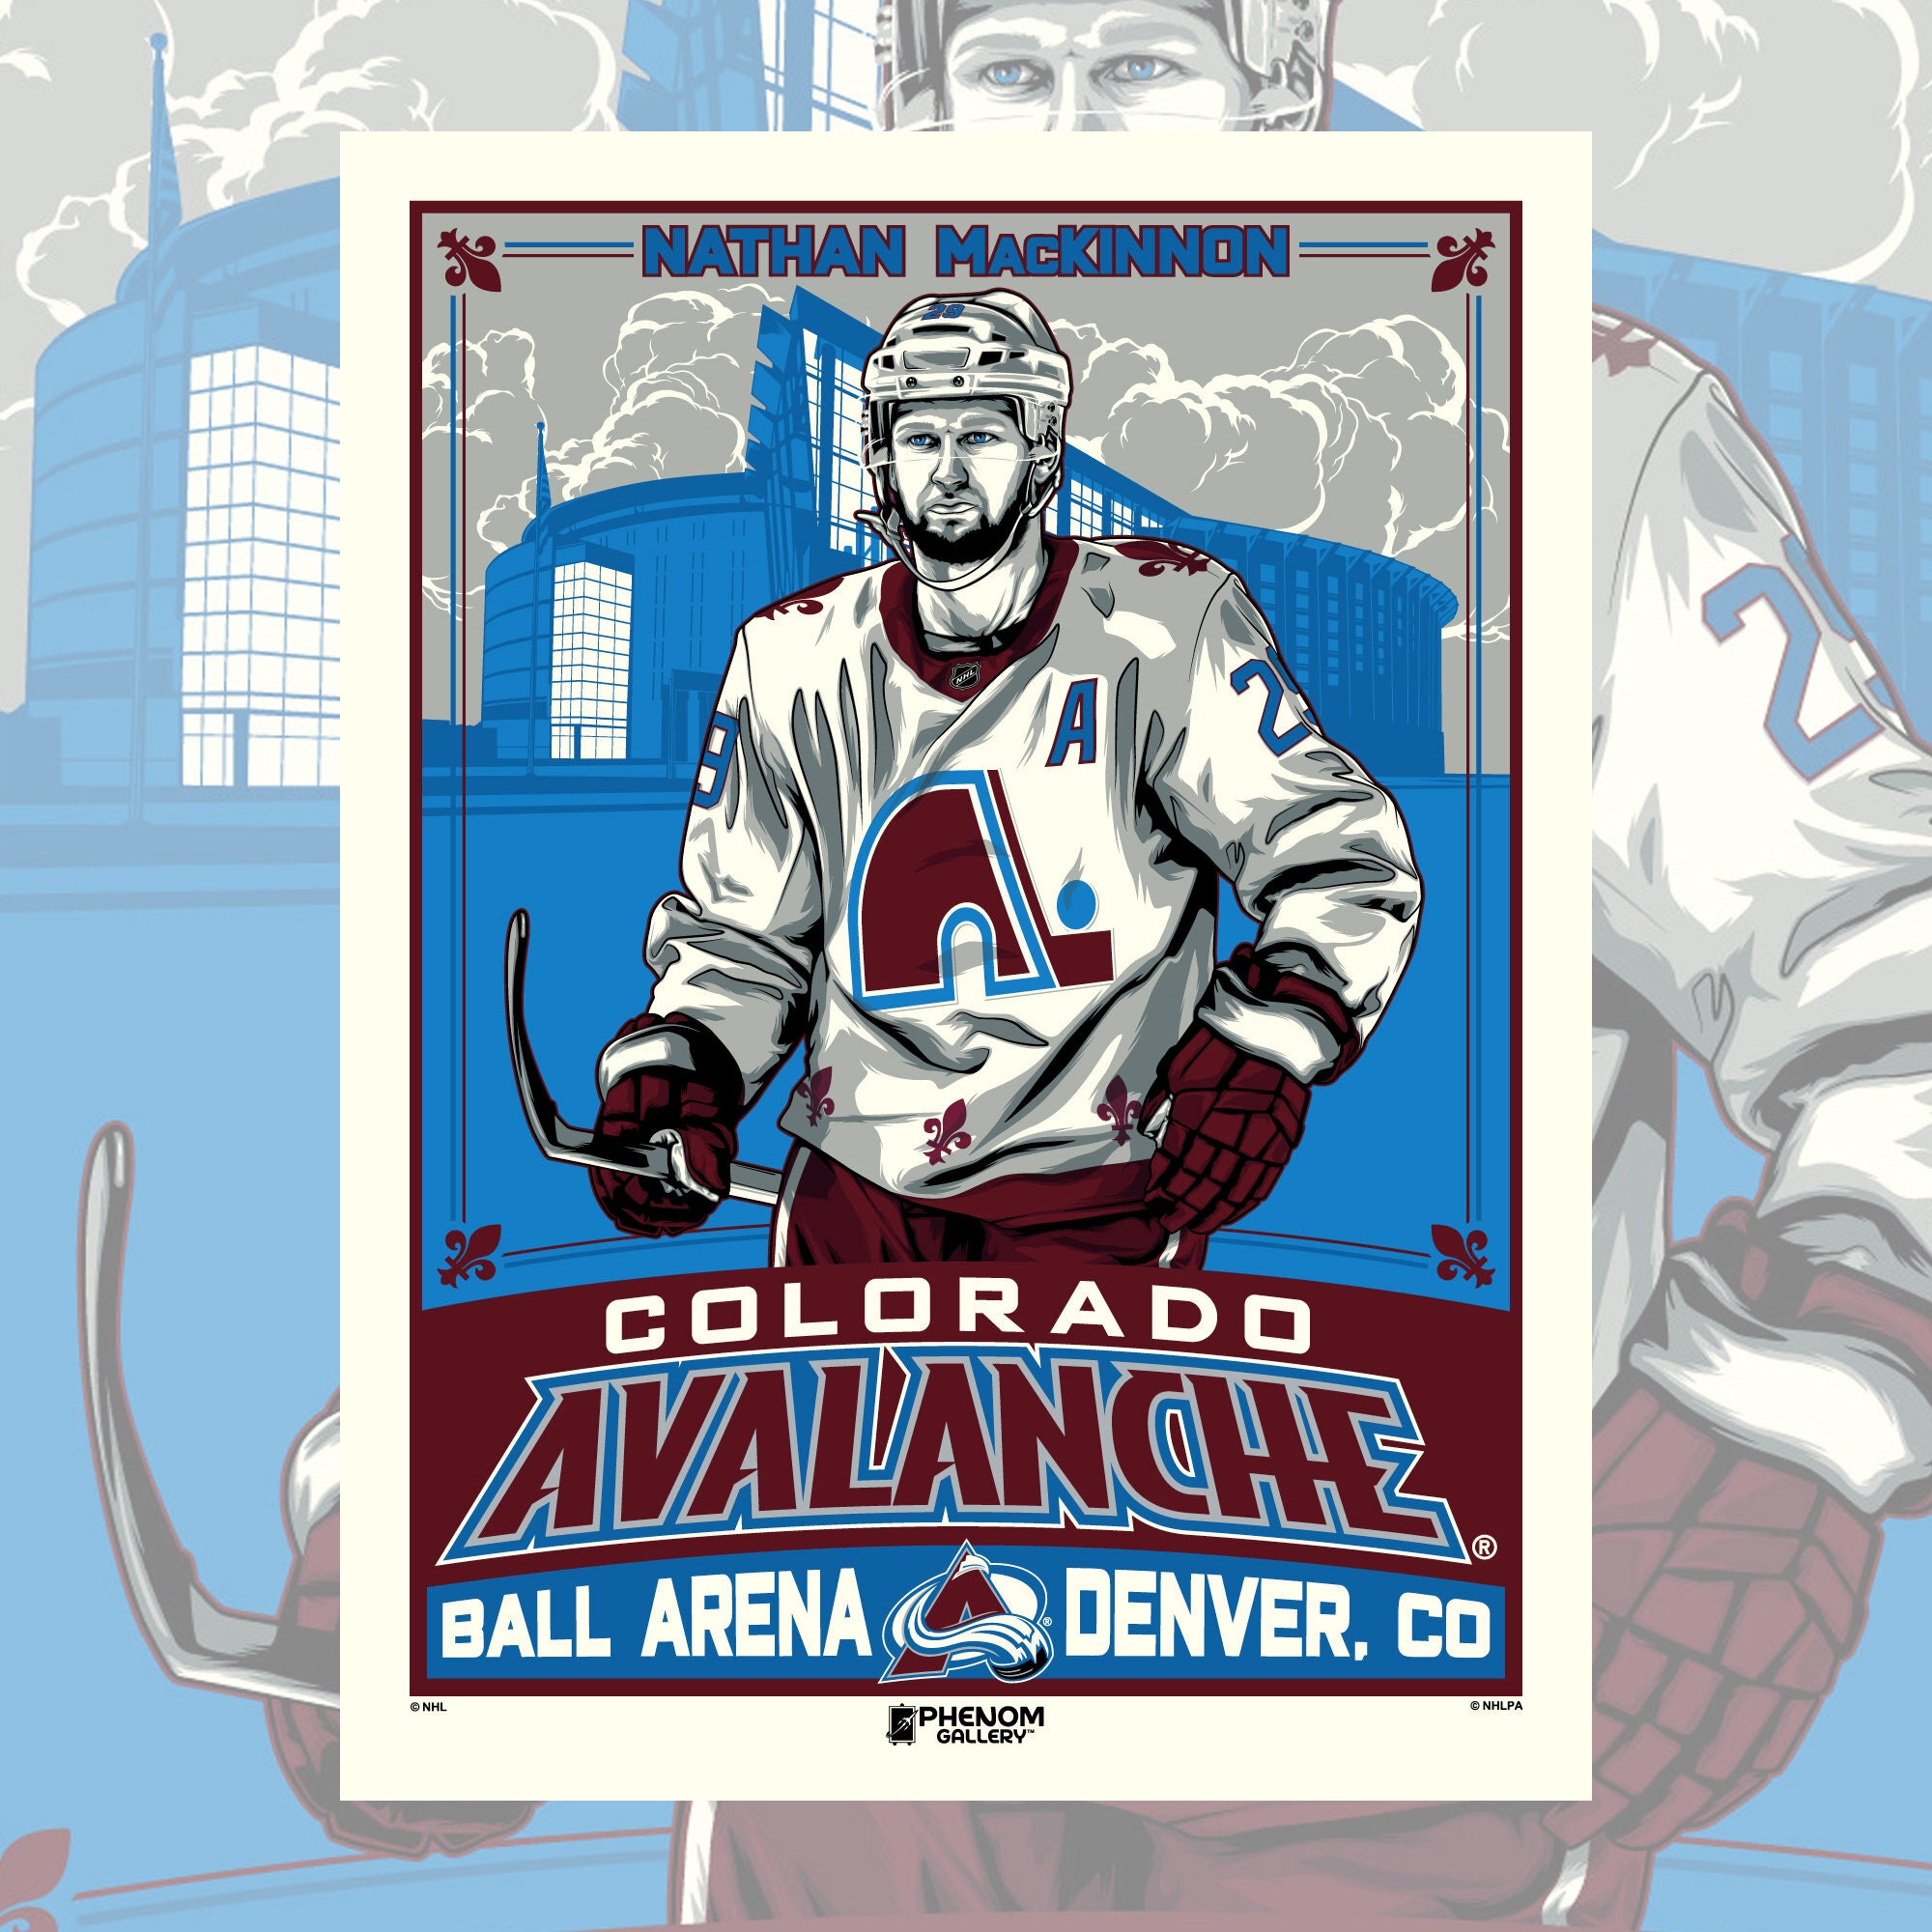 Colorado Avalanche to honor Quebec Nordiques on 'Reverse Retro